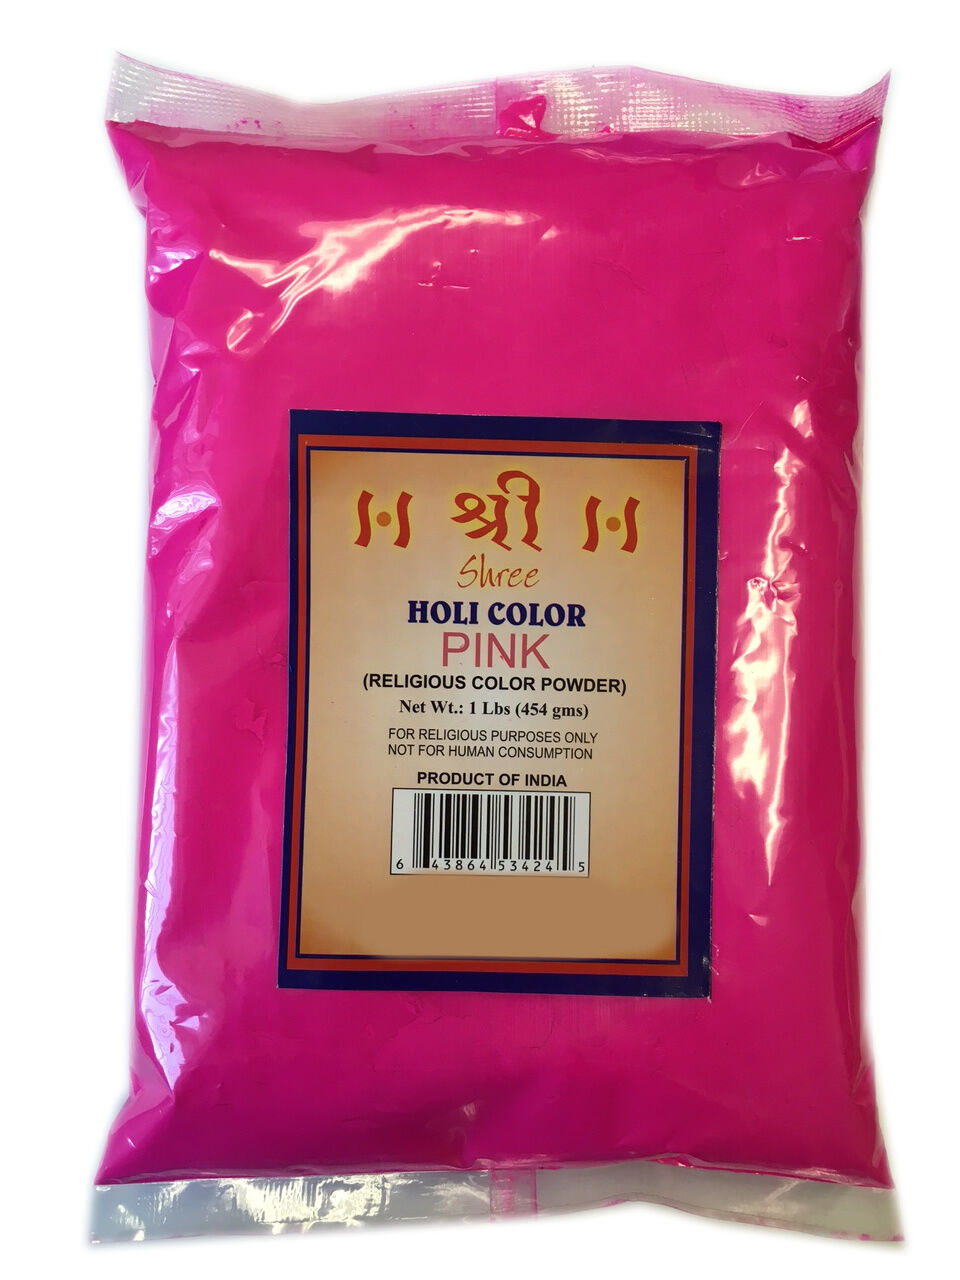 Buy 5 Get 1 Free Holi Color Powder Pink Colour Festival Colors (1lb)